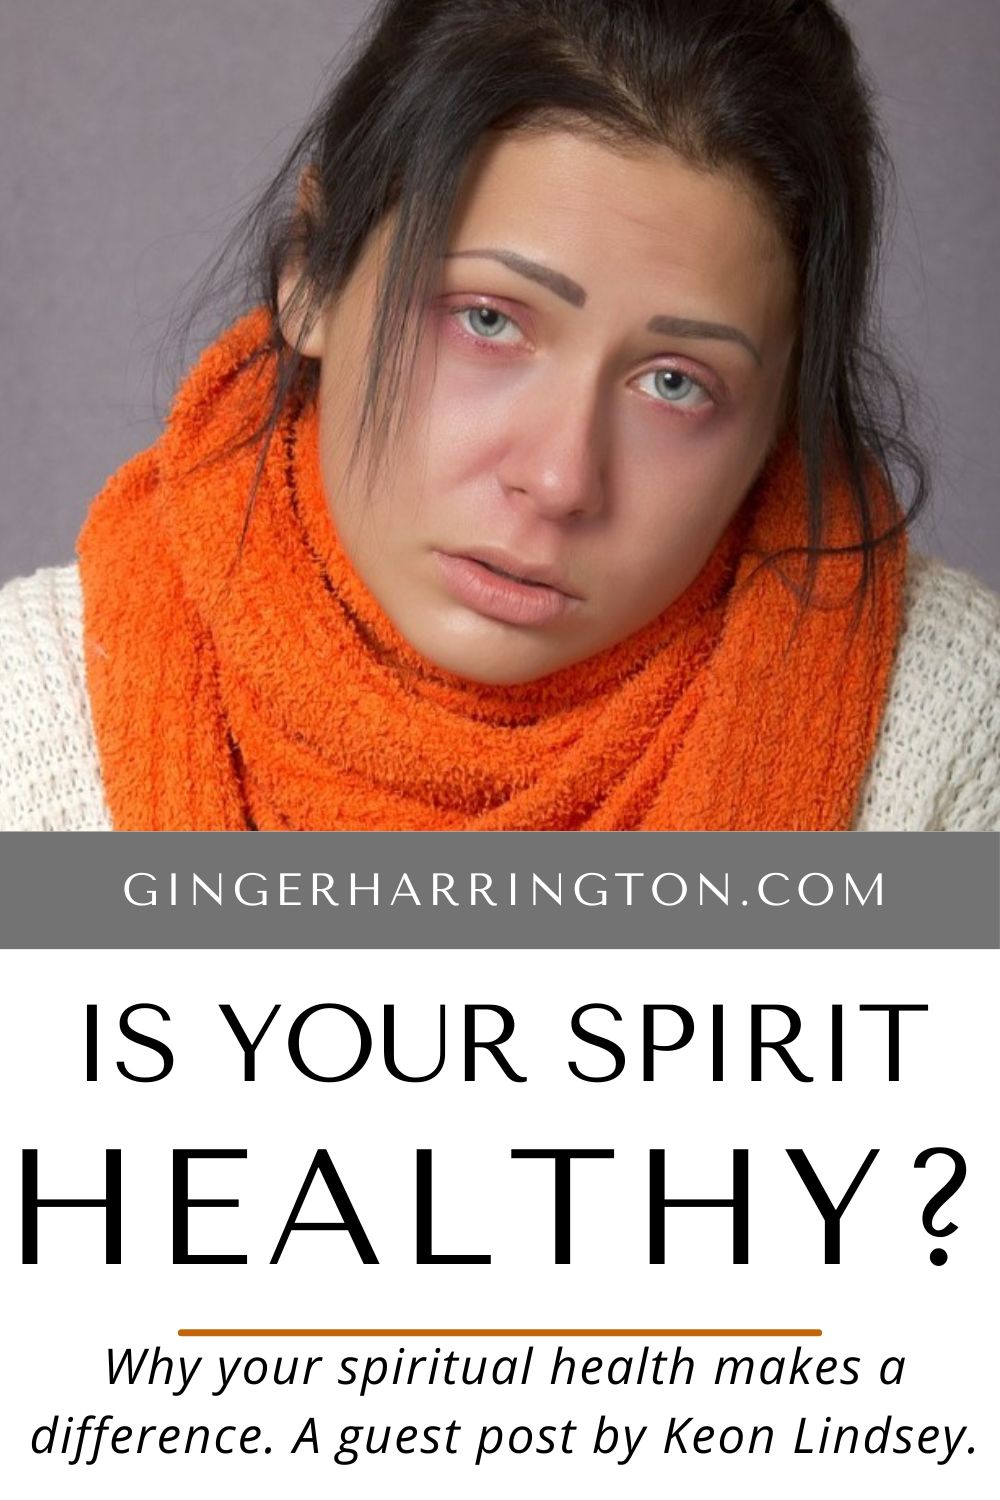 Woman in orange scarf looks sick and unhappy. Illustrates post on spiritual health